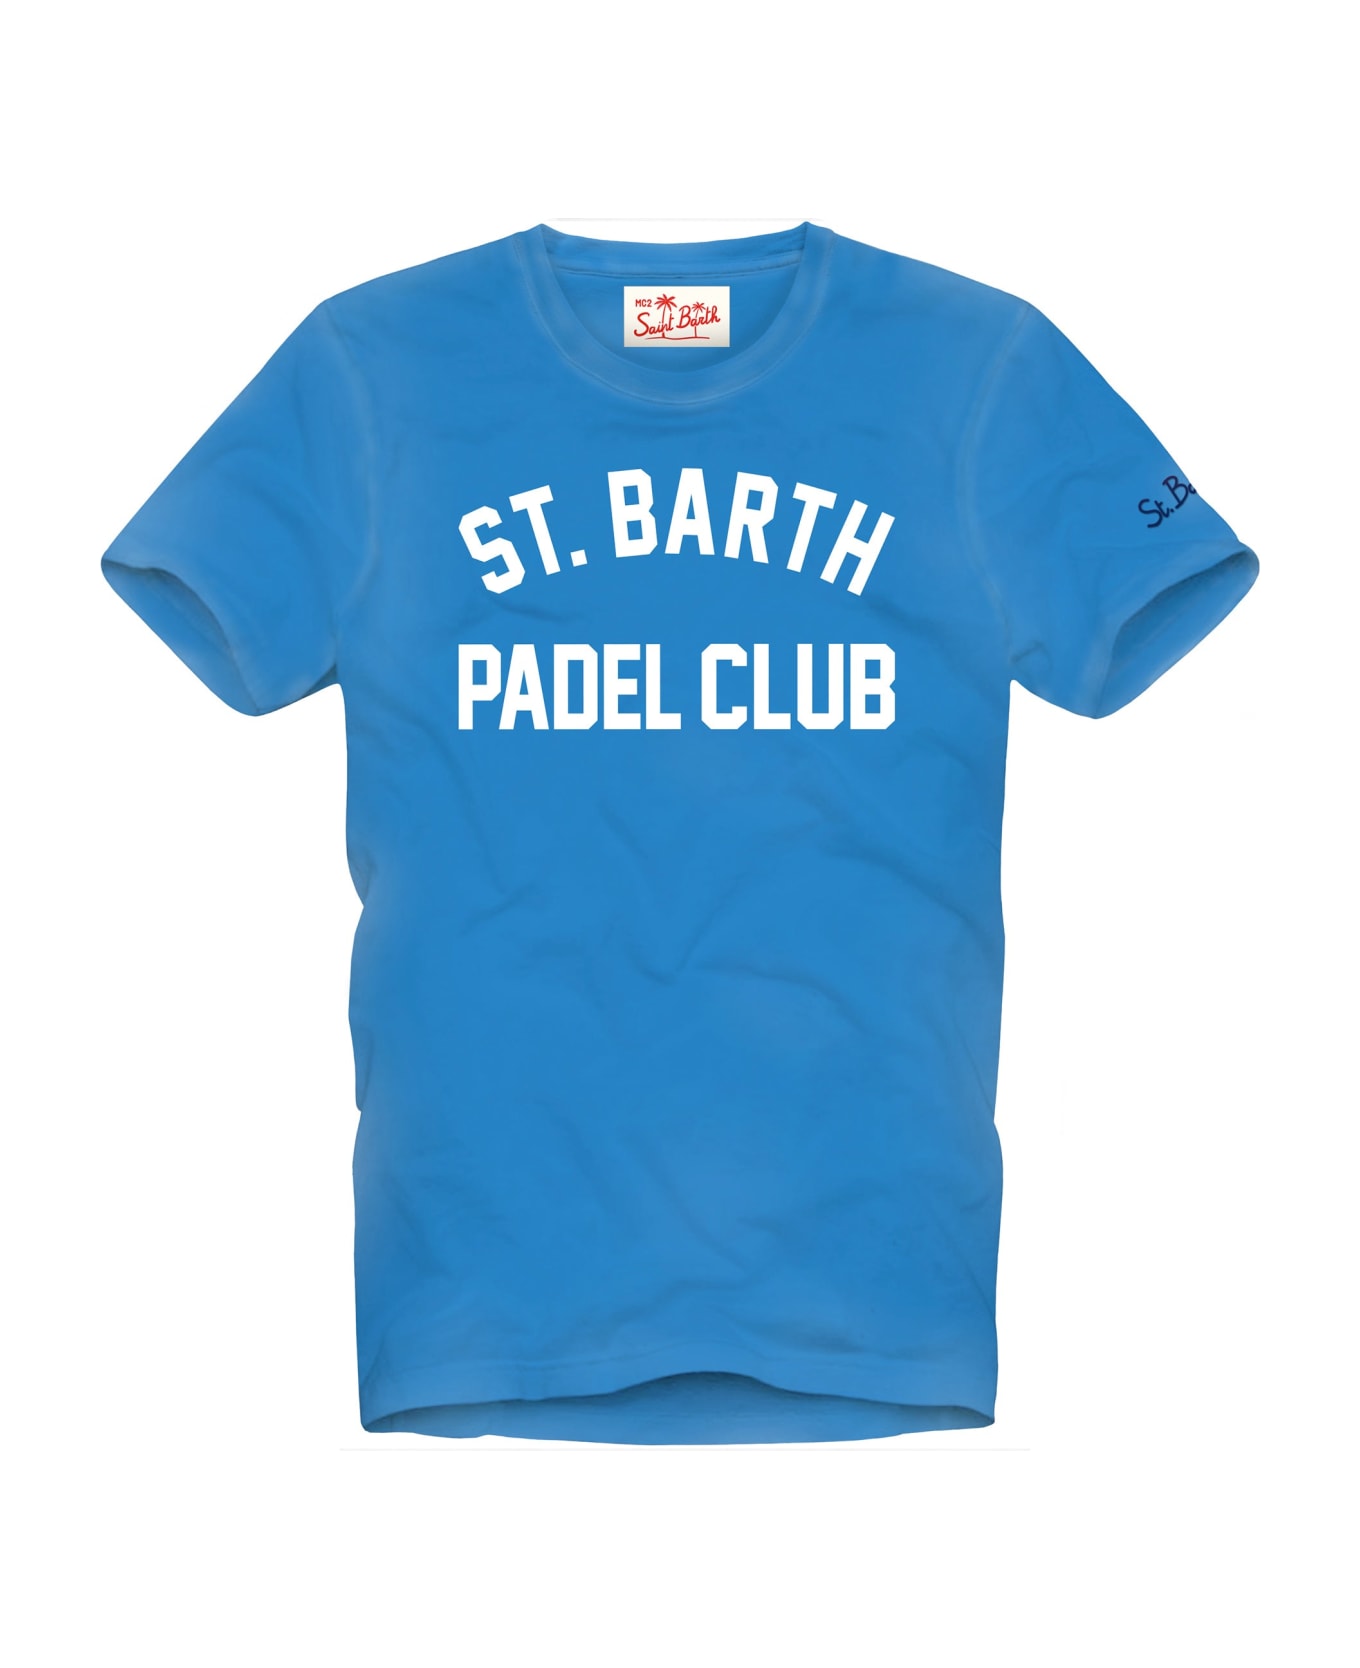 MC2 Saint Barth Man Cotton Vintage Treatment T-shirt With St. Barth Padel Club Print - BLUE